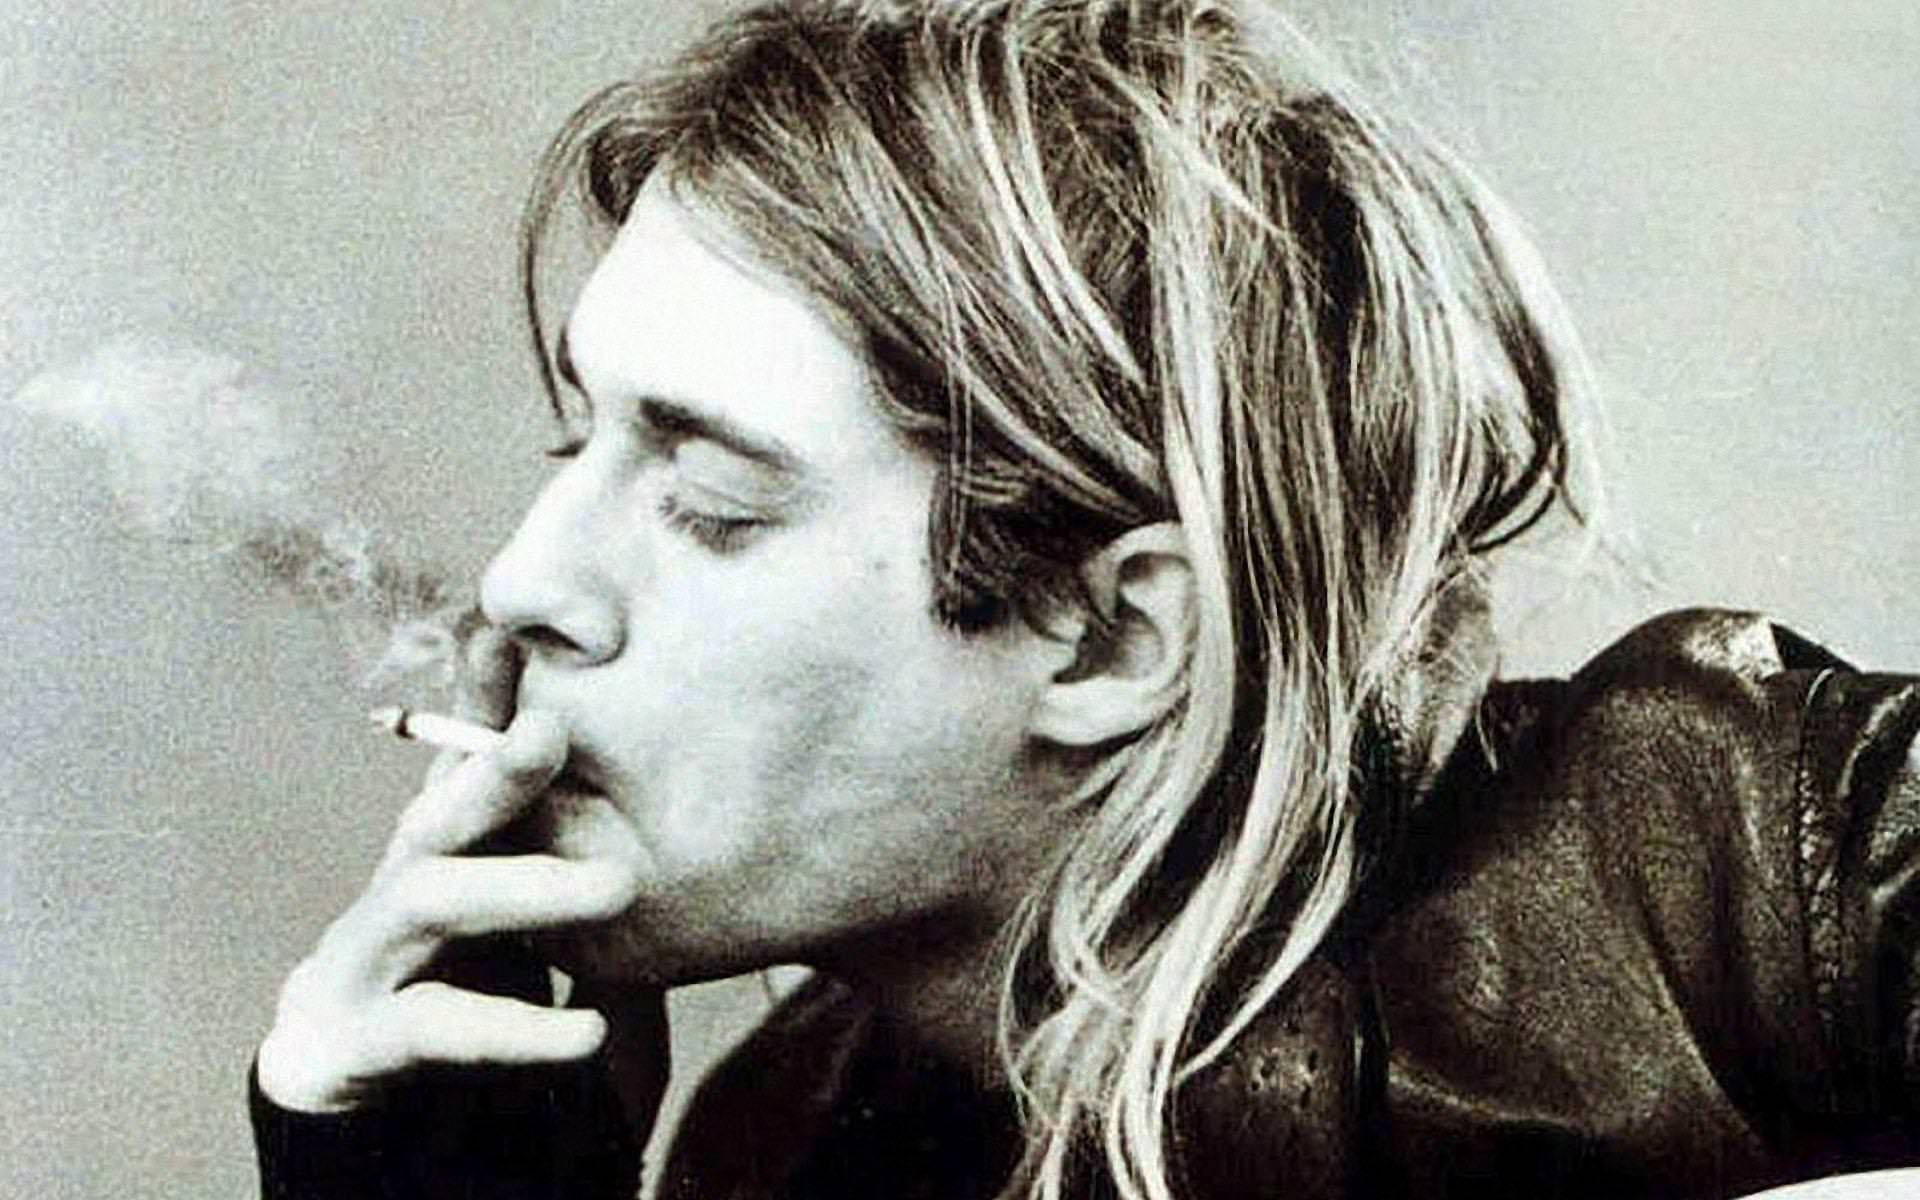 Kurt Cobain wallpaper HD background download Facebook Covers